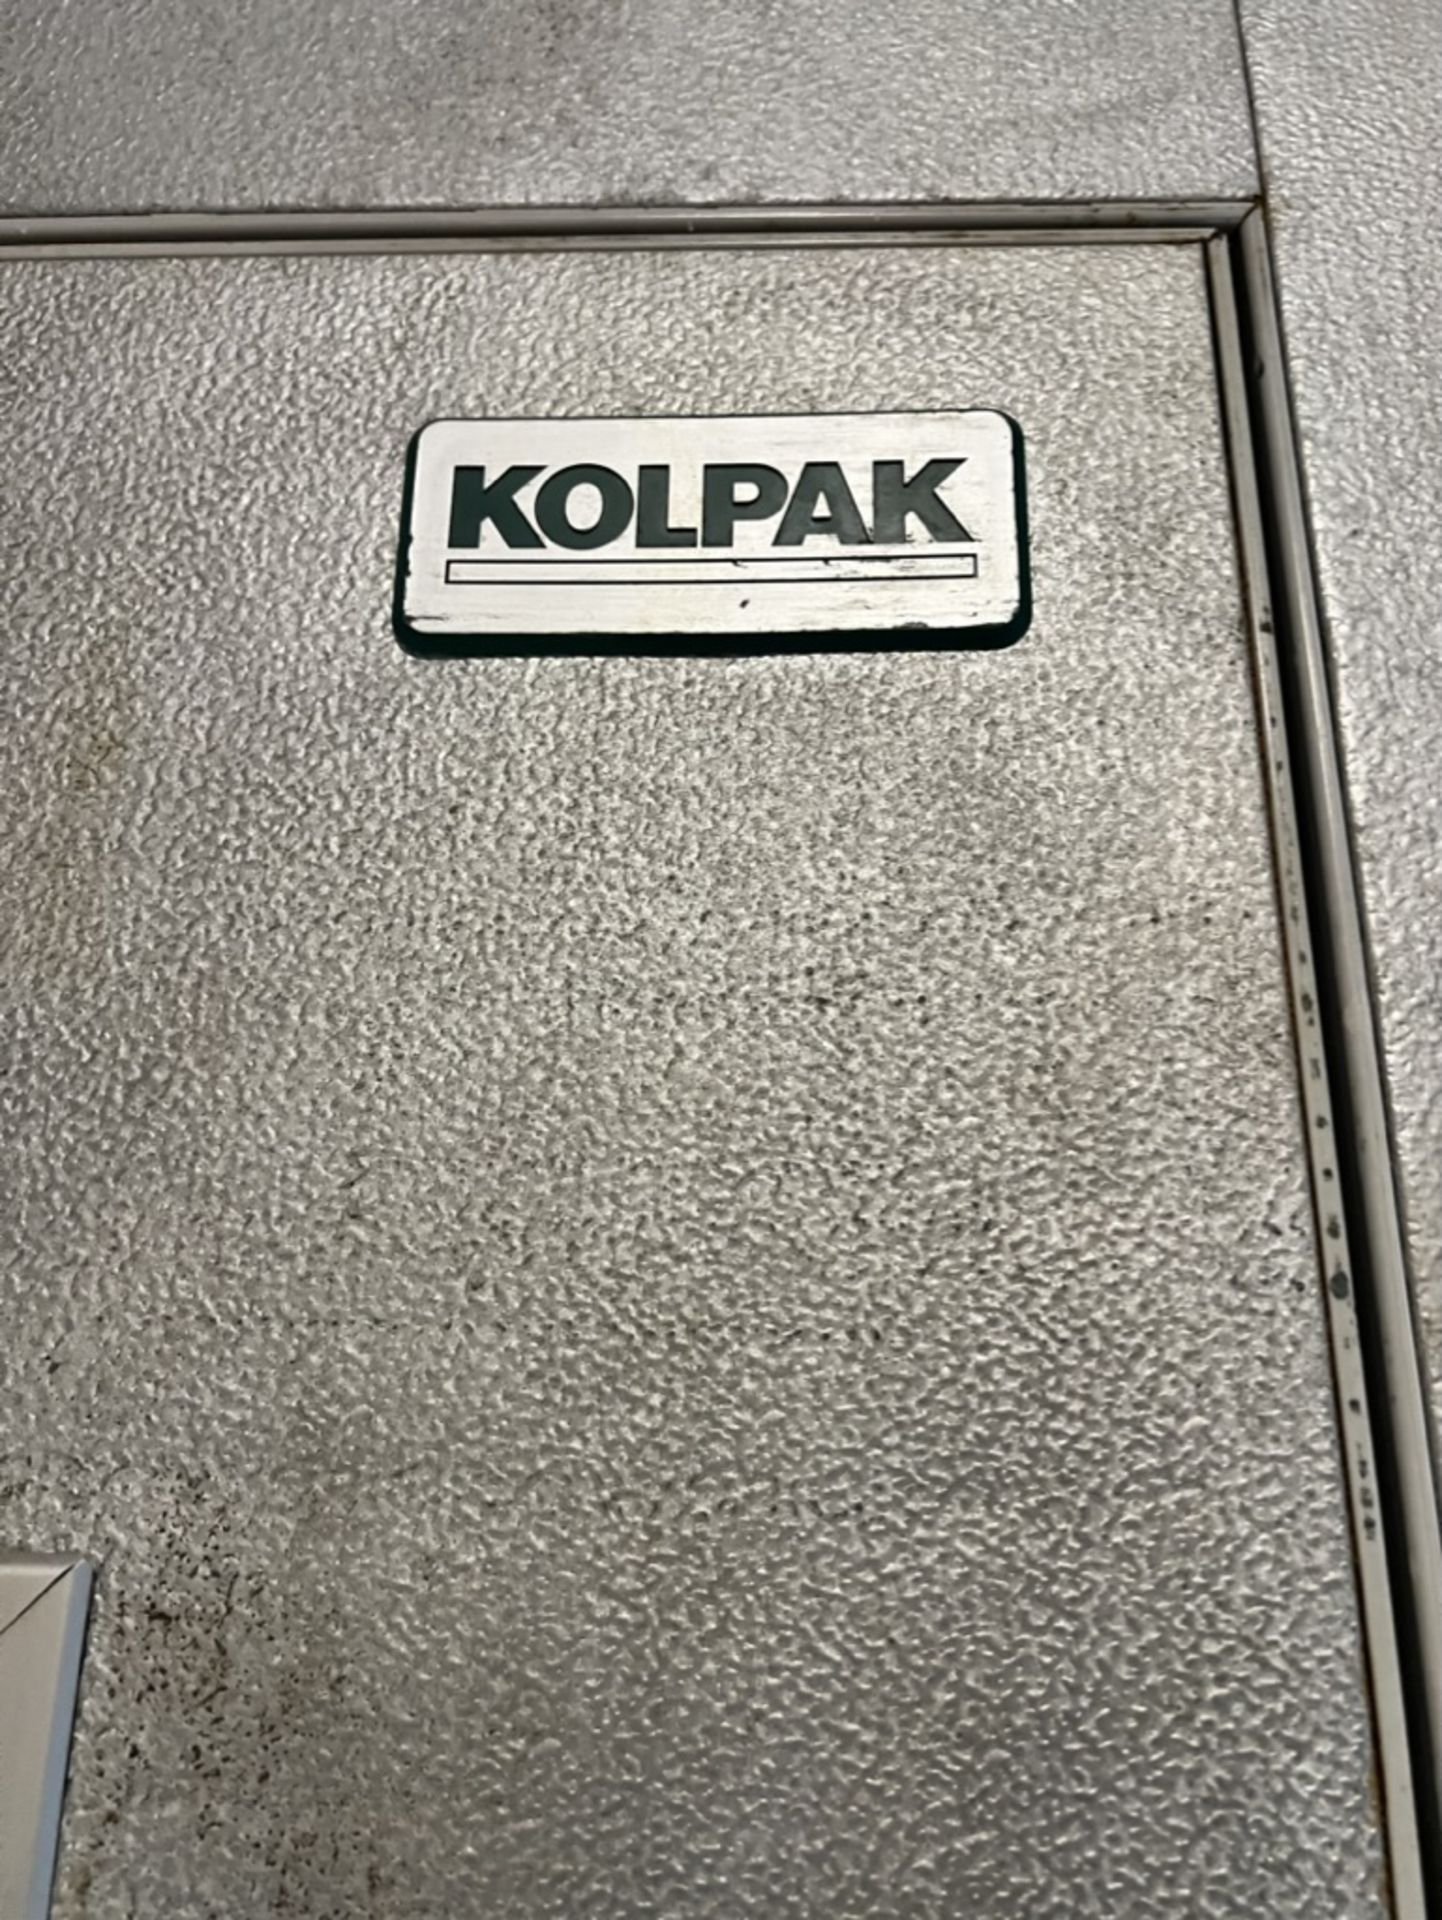 KOLPAK WALK-IN FREEZER (INSIDE DIMS 16" 7"L 7" 1"W 7" 5" H (Located Cleveland, OH) - Image 8 of 8